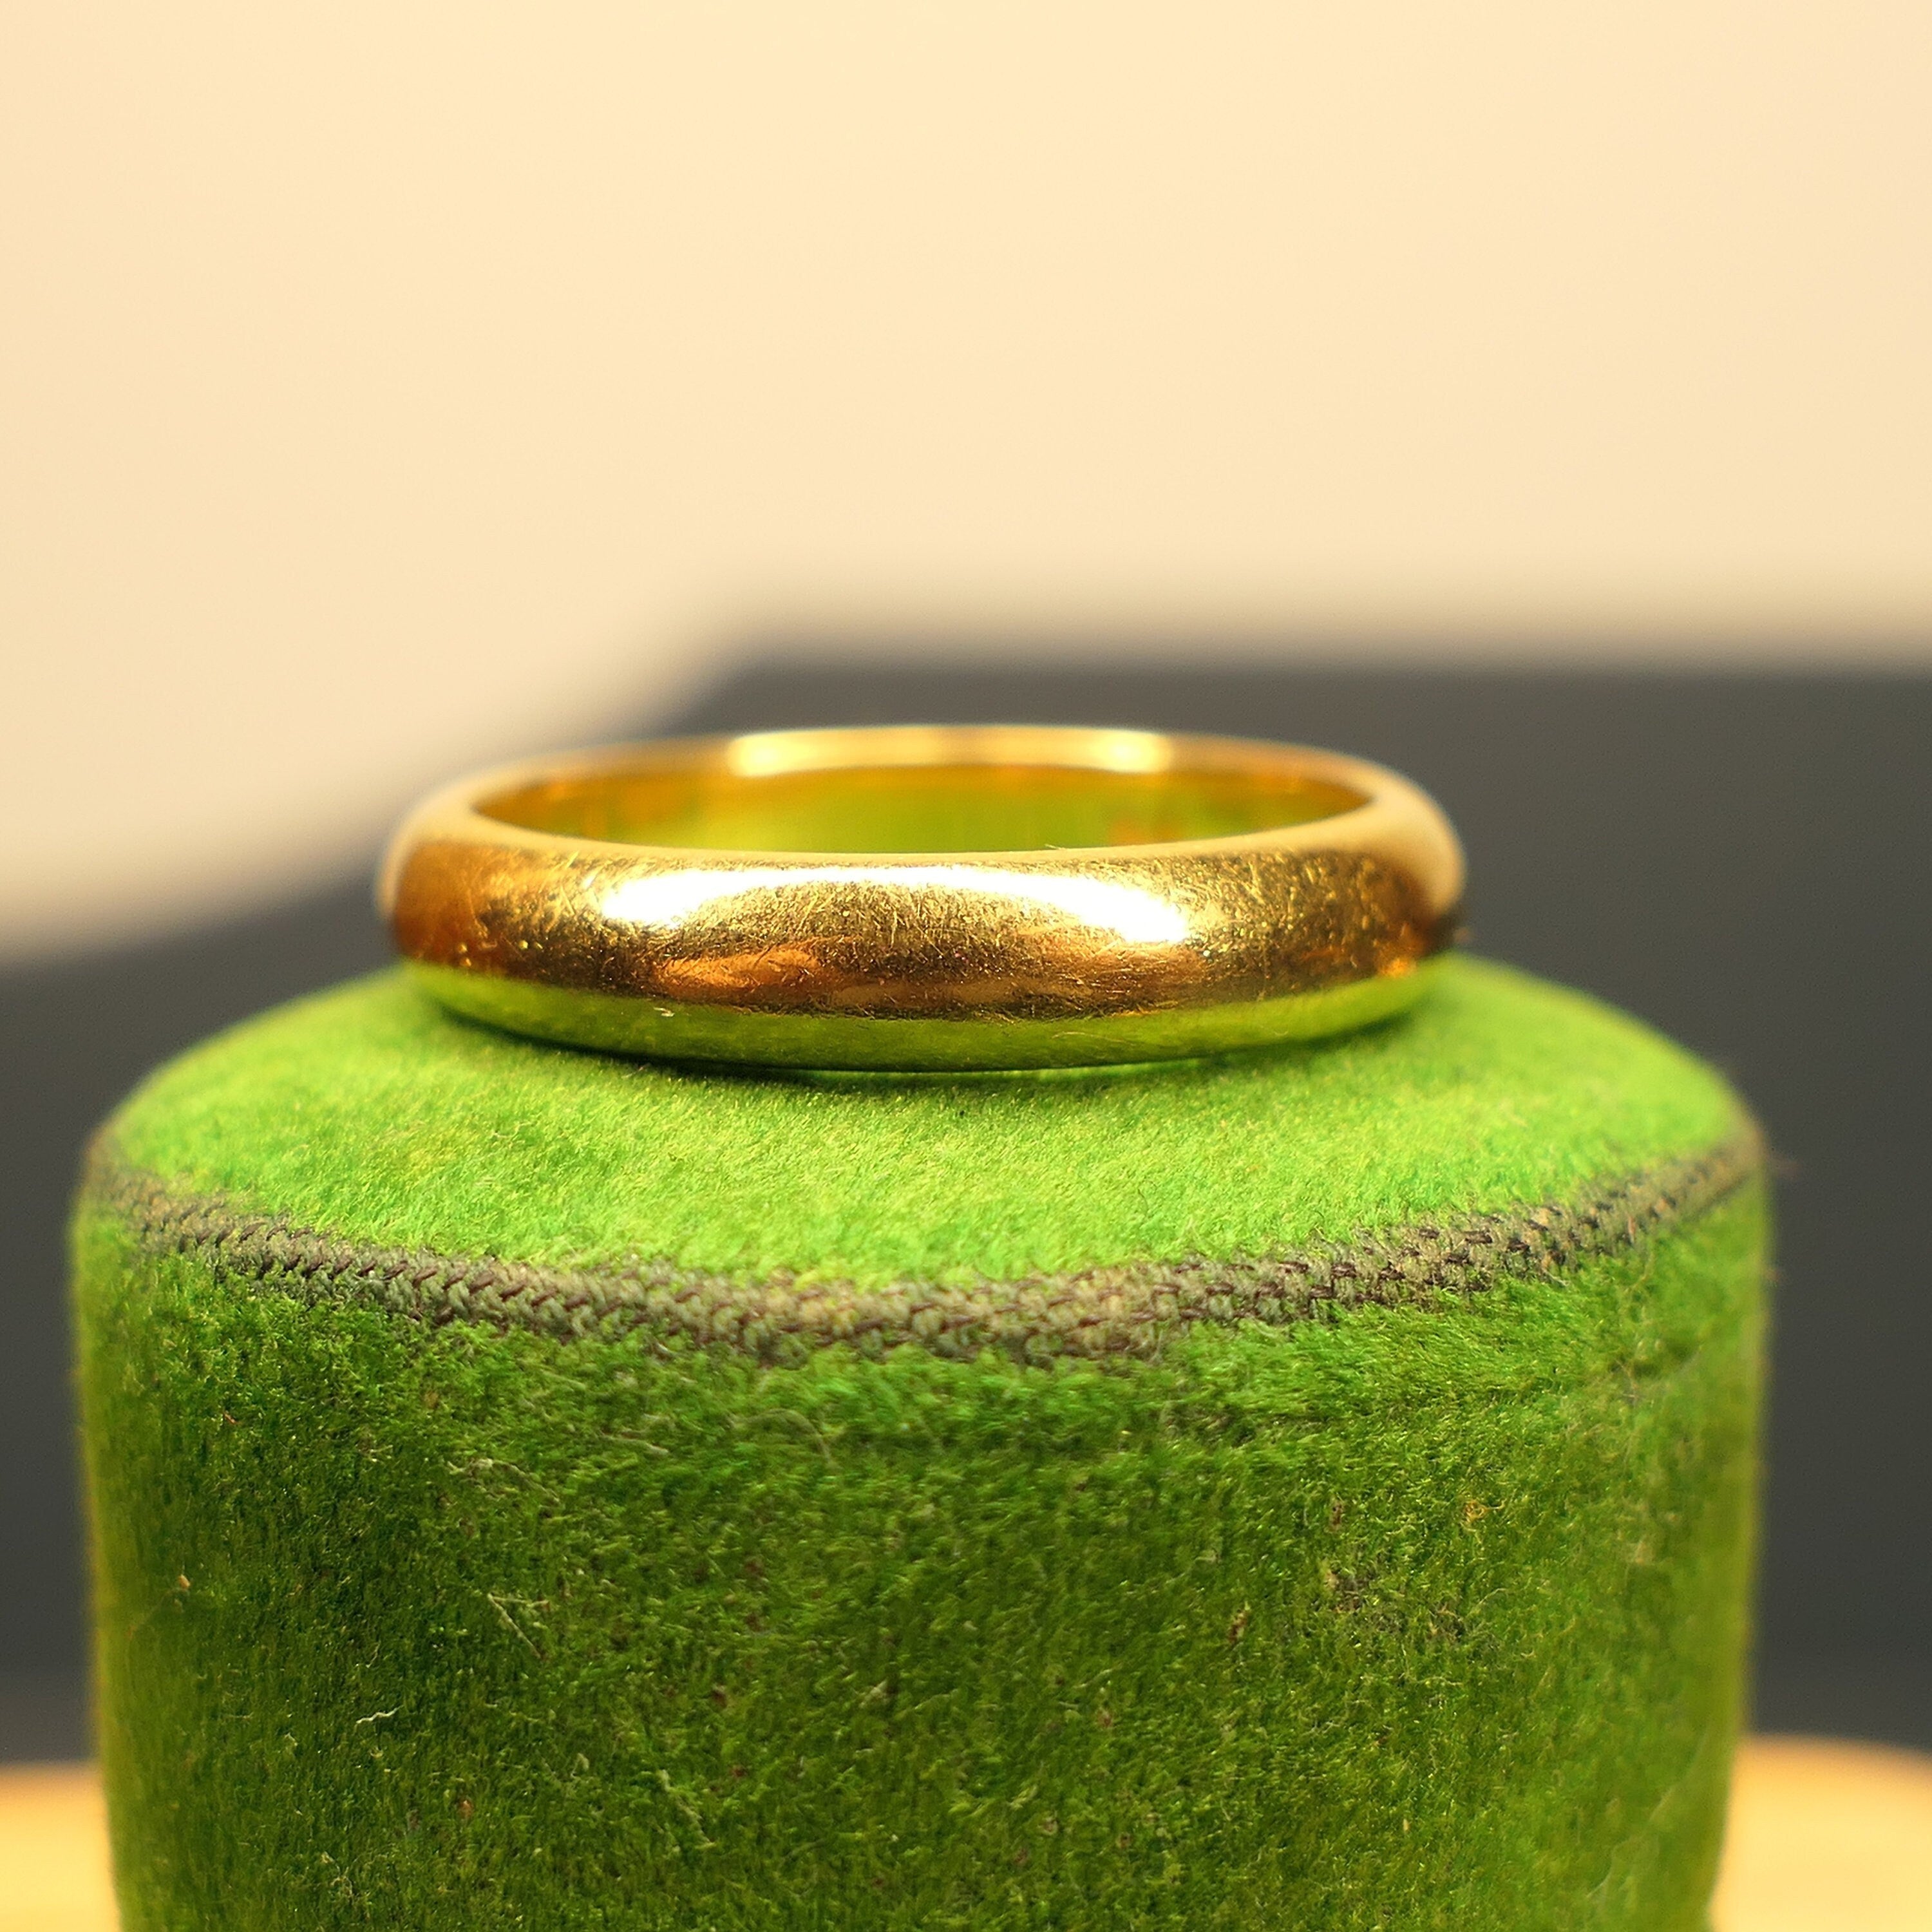 Vintage, 22ct Gold Wedding Band Ring